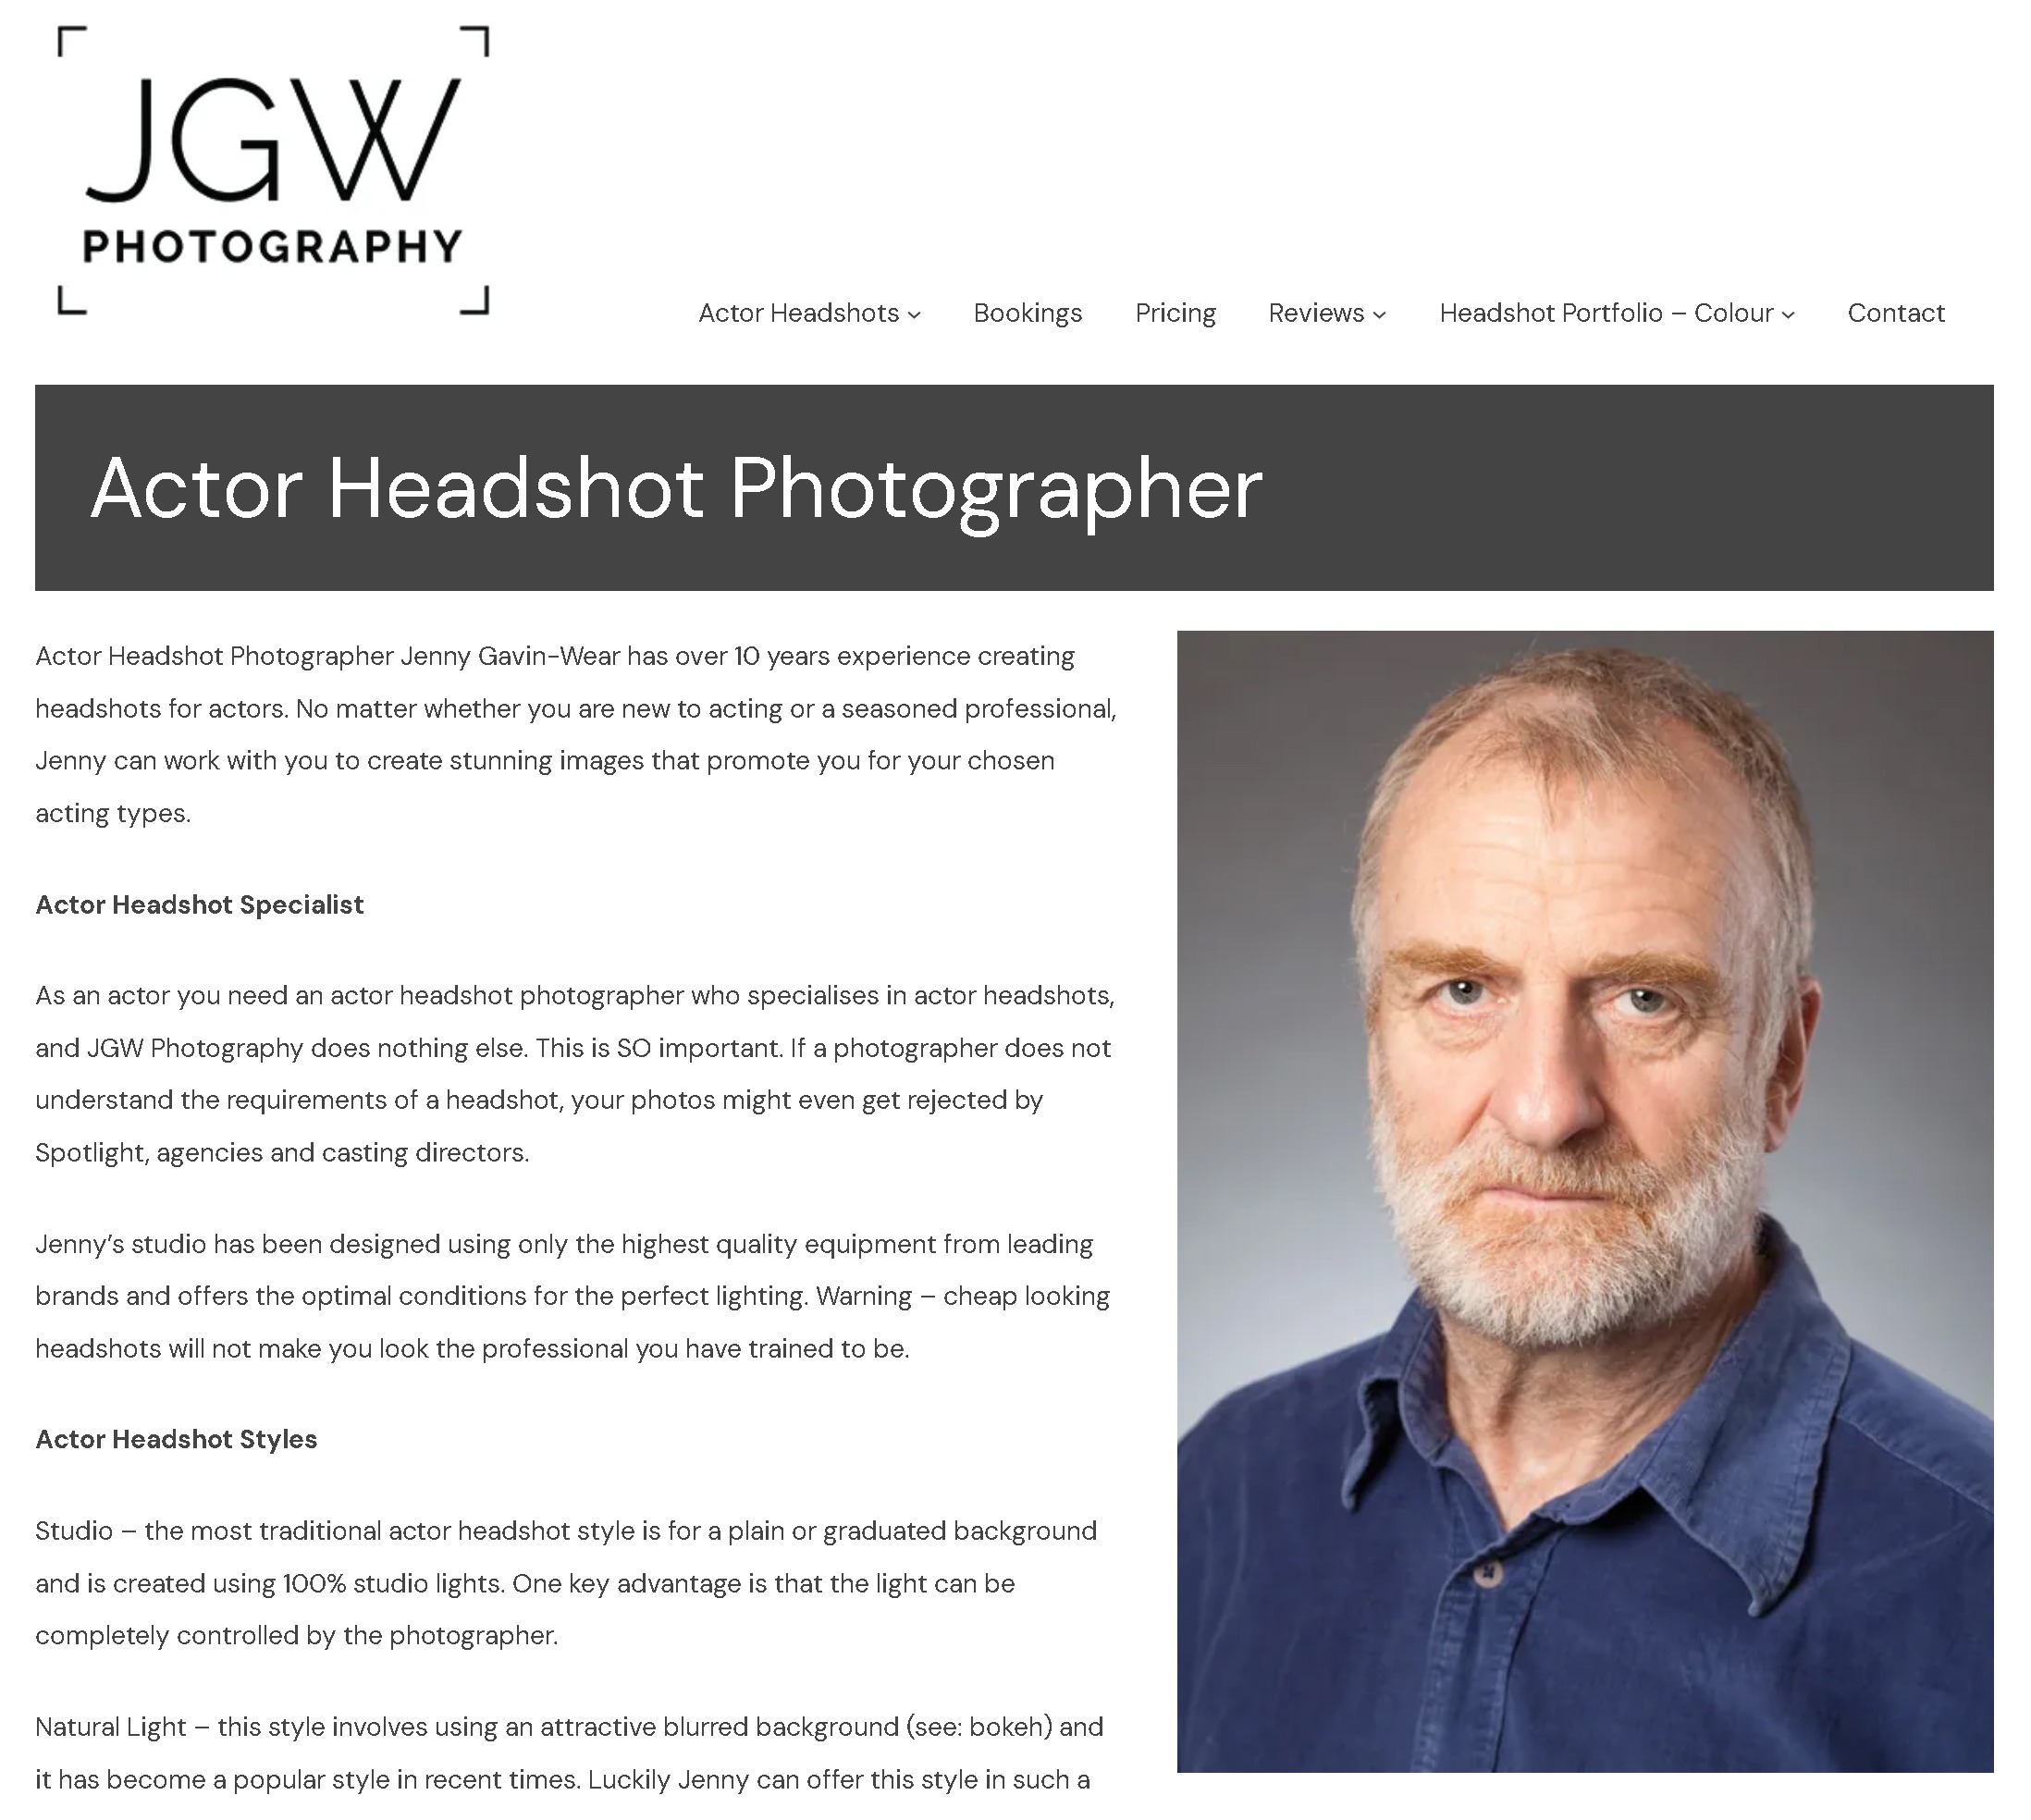 JGW Photography: New Website